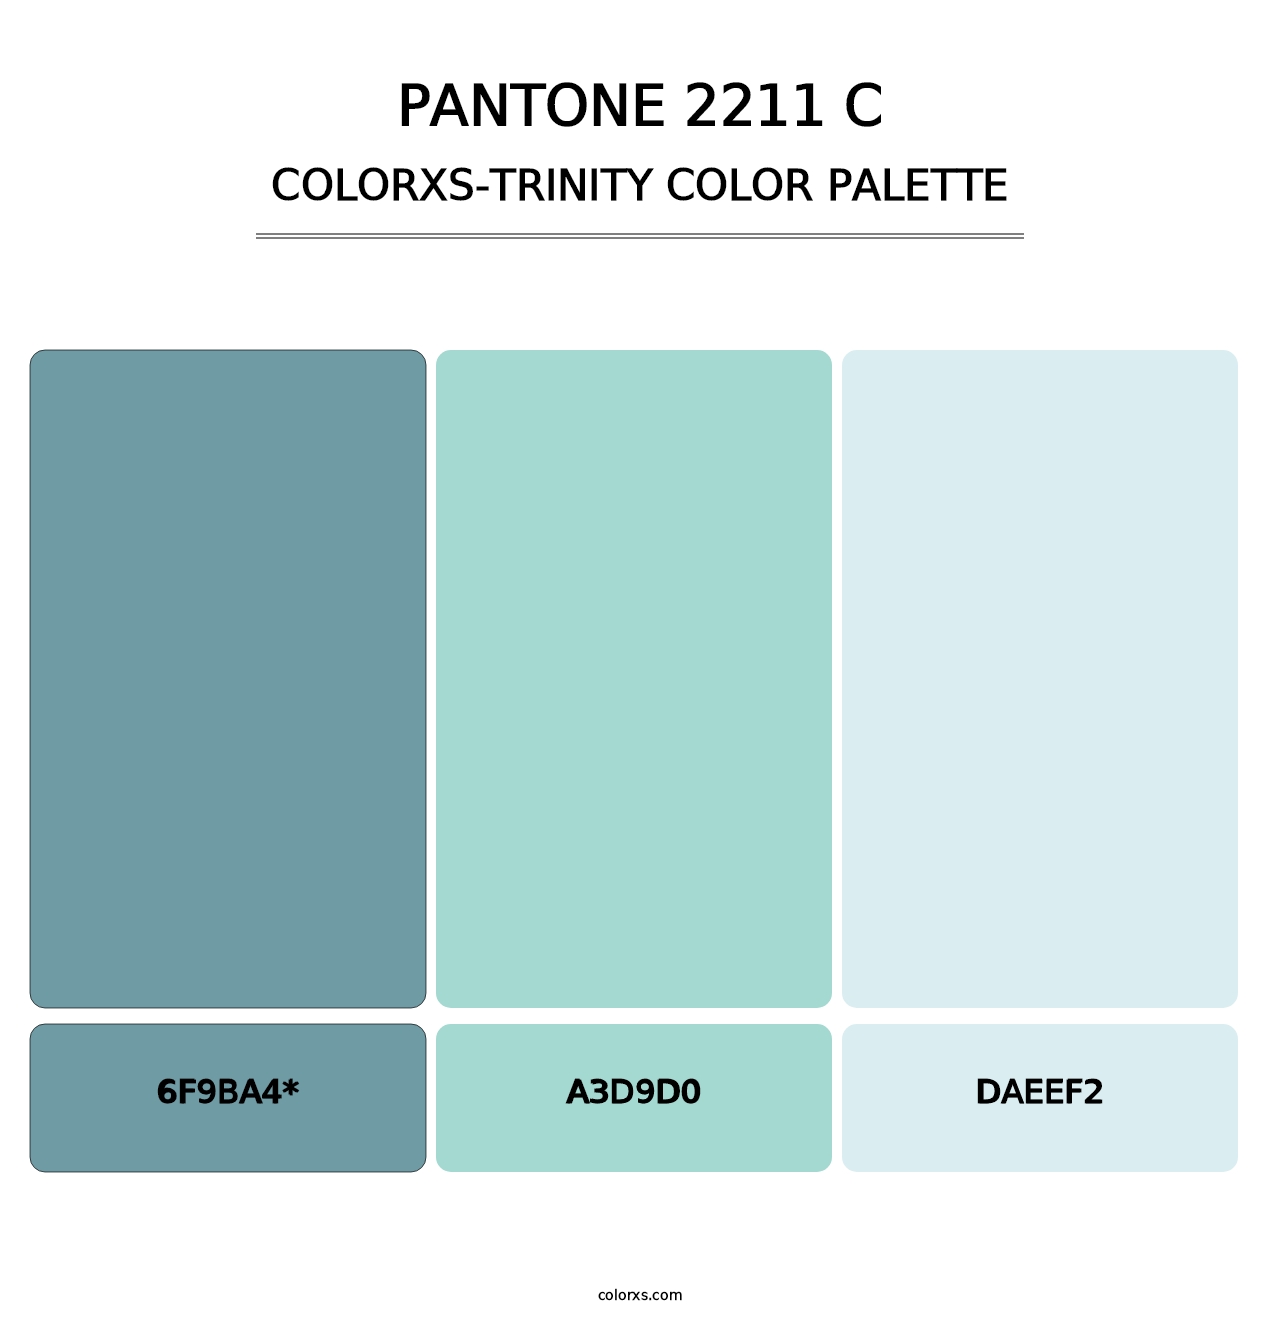 PANTONE 2211 C - Colorxs Trinity Palette